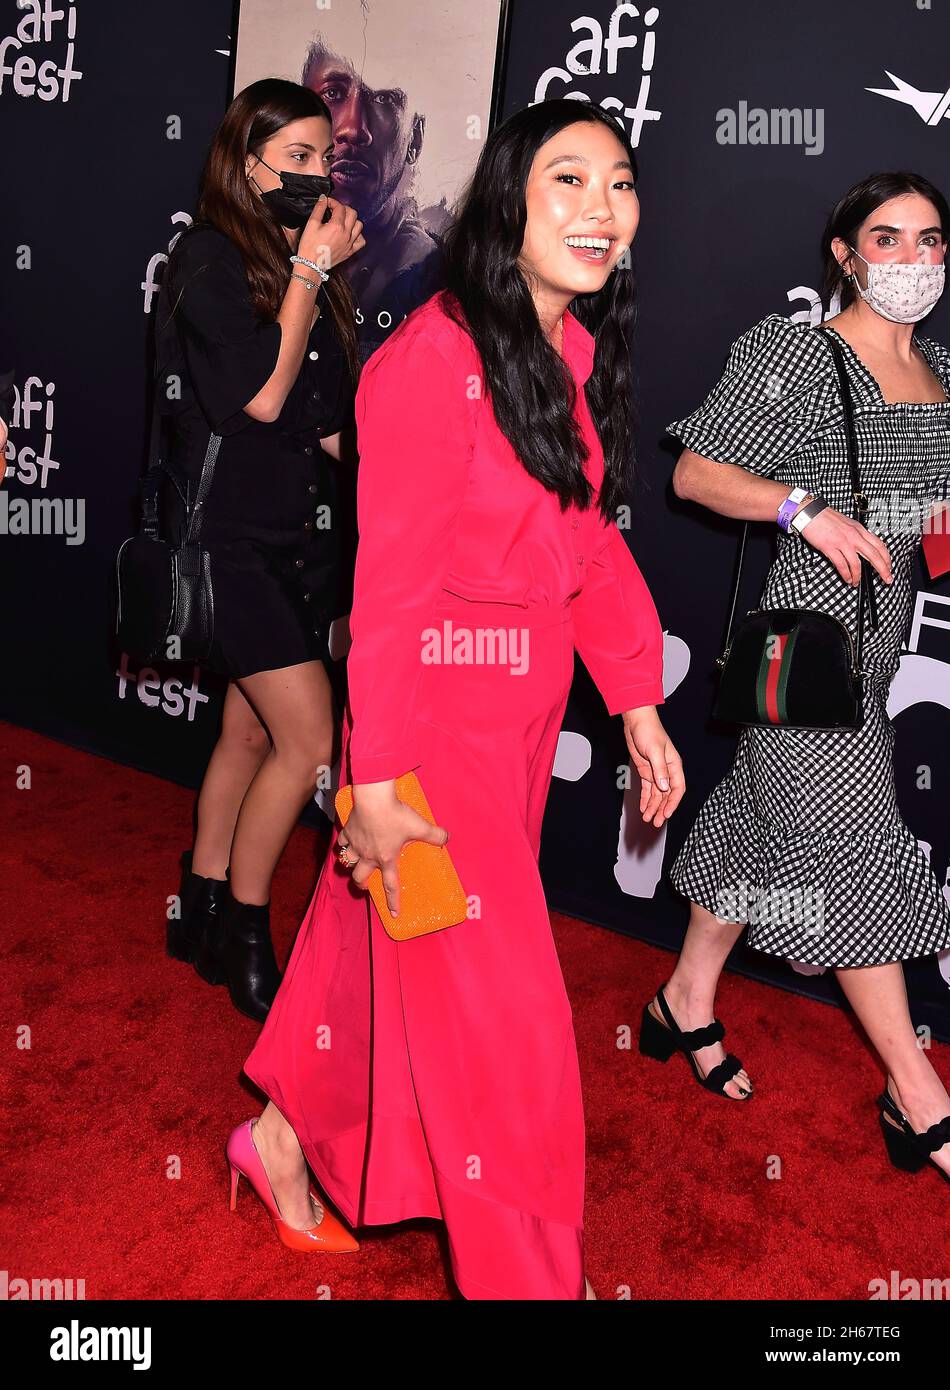 HOLLYWOOD, CA - NOVEMBRE 12: L'attrice Awkwafina partecipa al 'Song song' dell'AFI Fest 2021 al TCL Chinese Theatre il 12 Novembre 2021 a Hollywood, California. Foto Stock